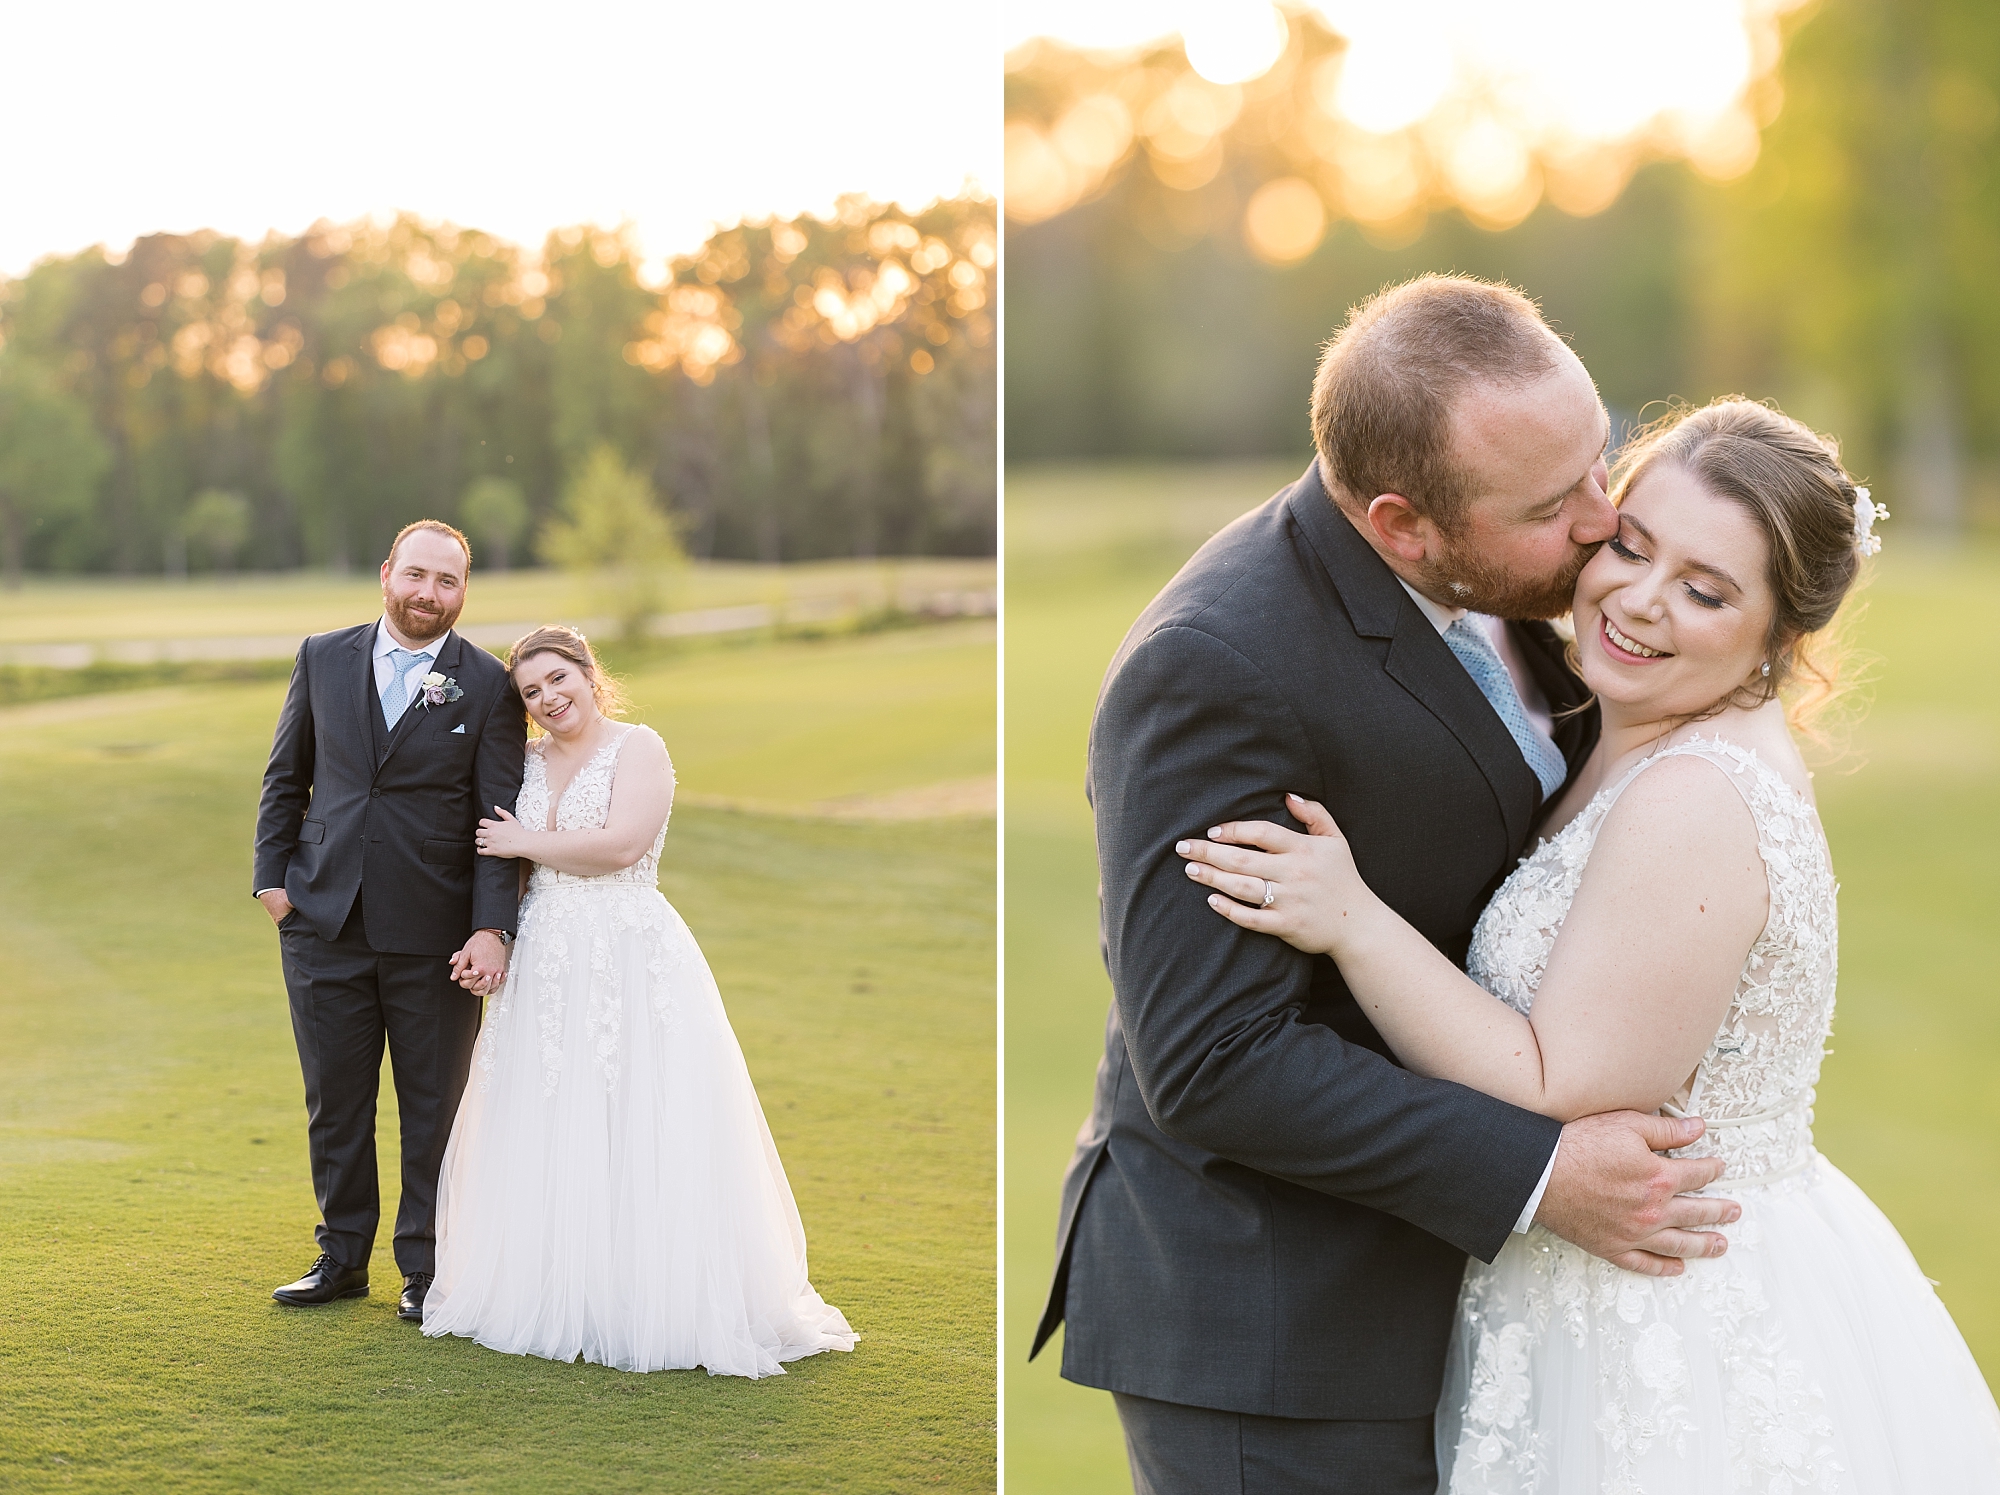 Groom kissing brides cheek at 12 oaks - Raleigh NC Wedding Photographer - Sarah Hinckley Photography